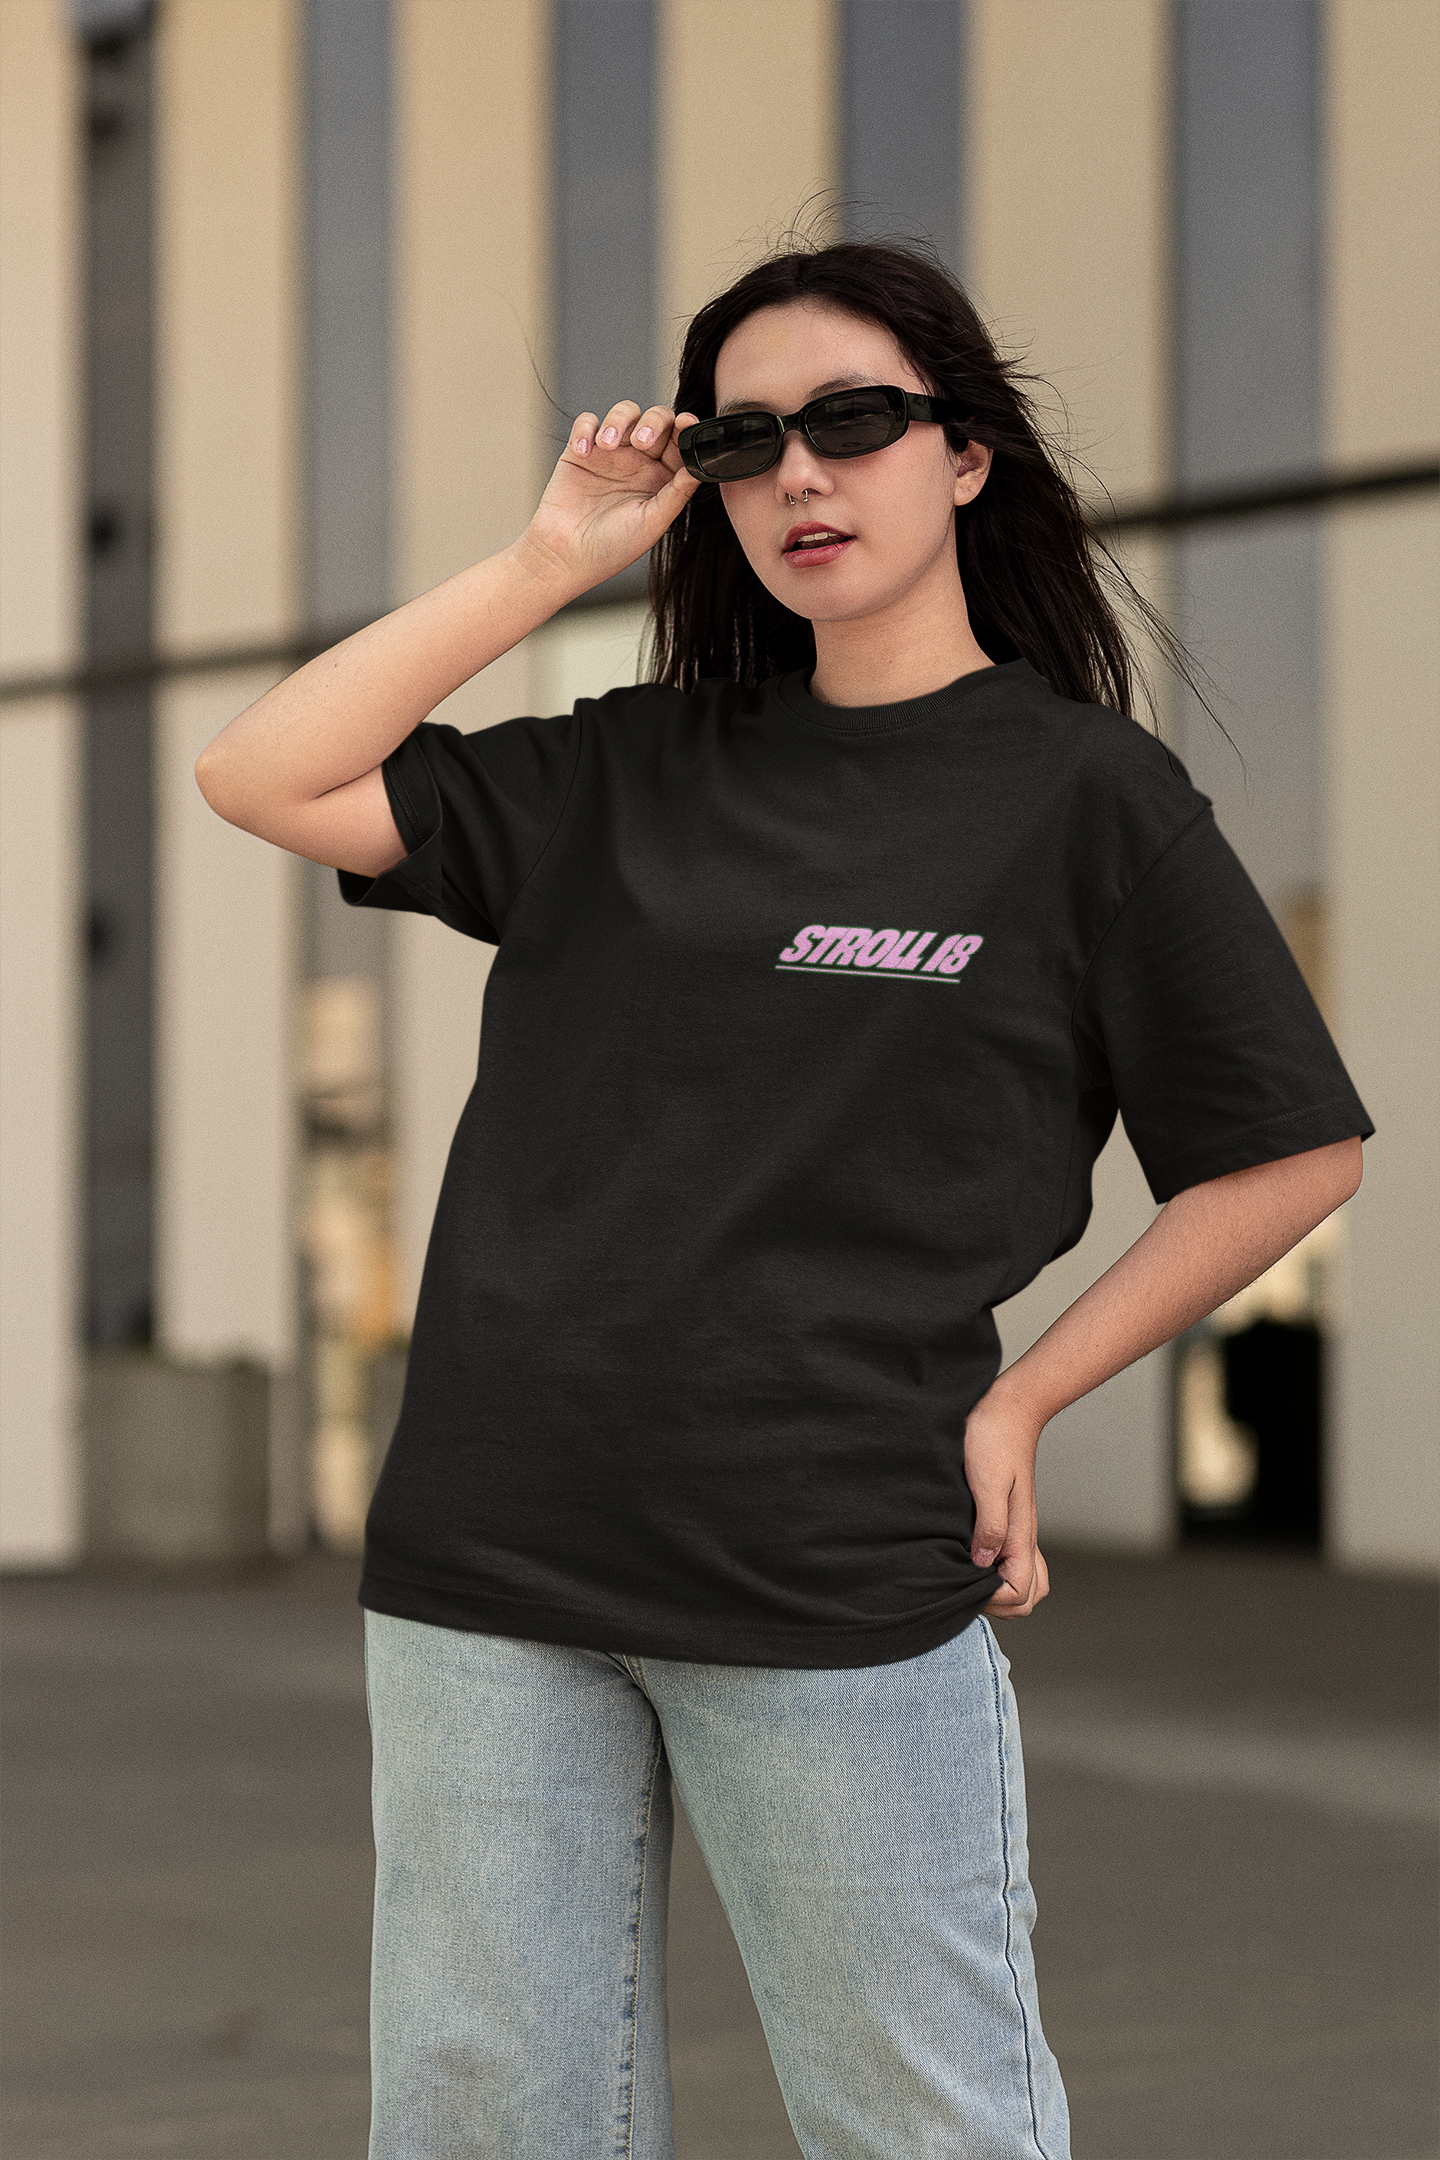 Lance Stroll oversized T-Shirt WOMEN